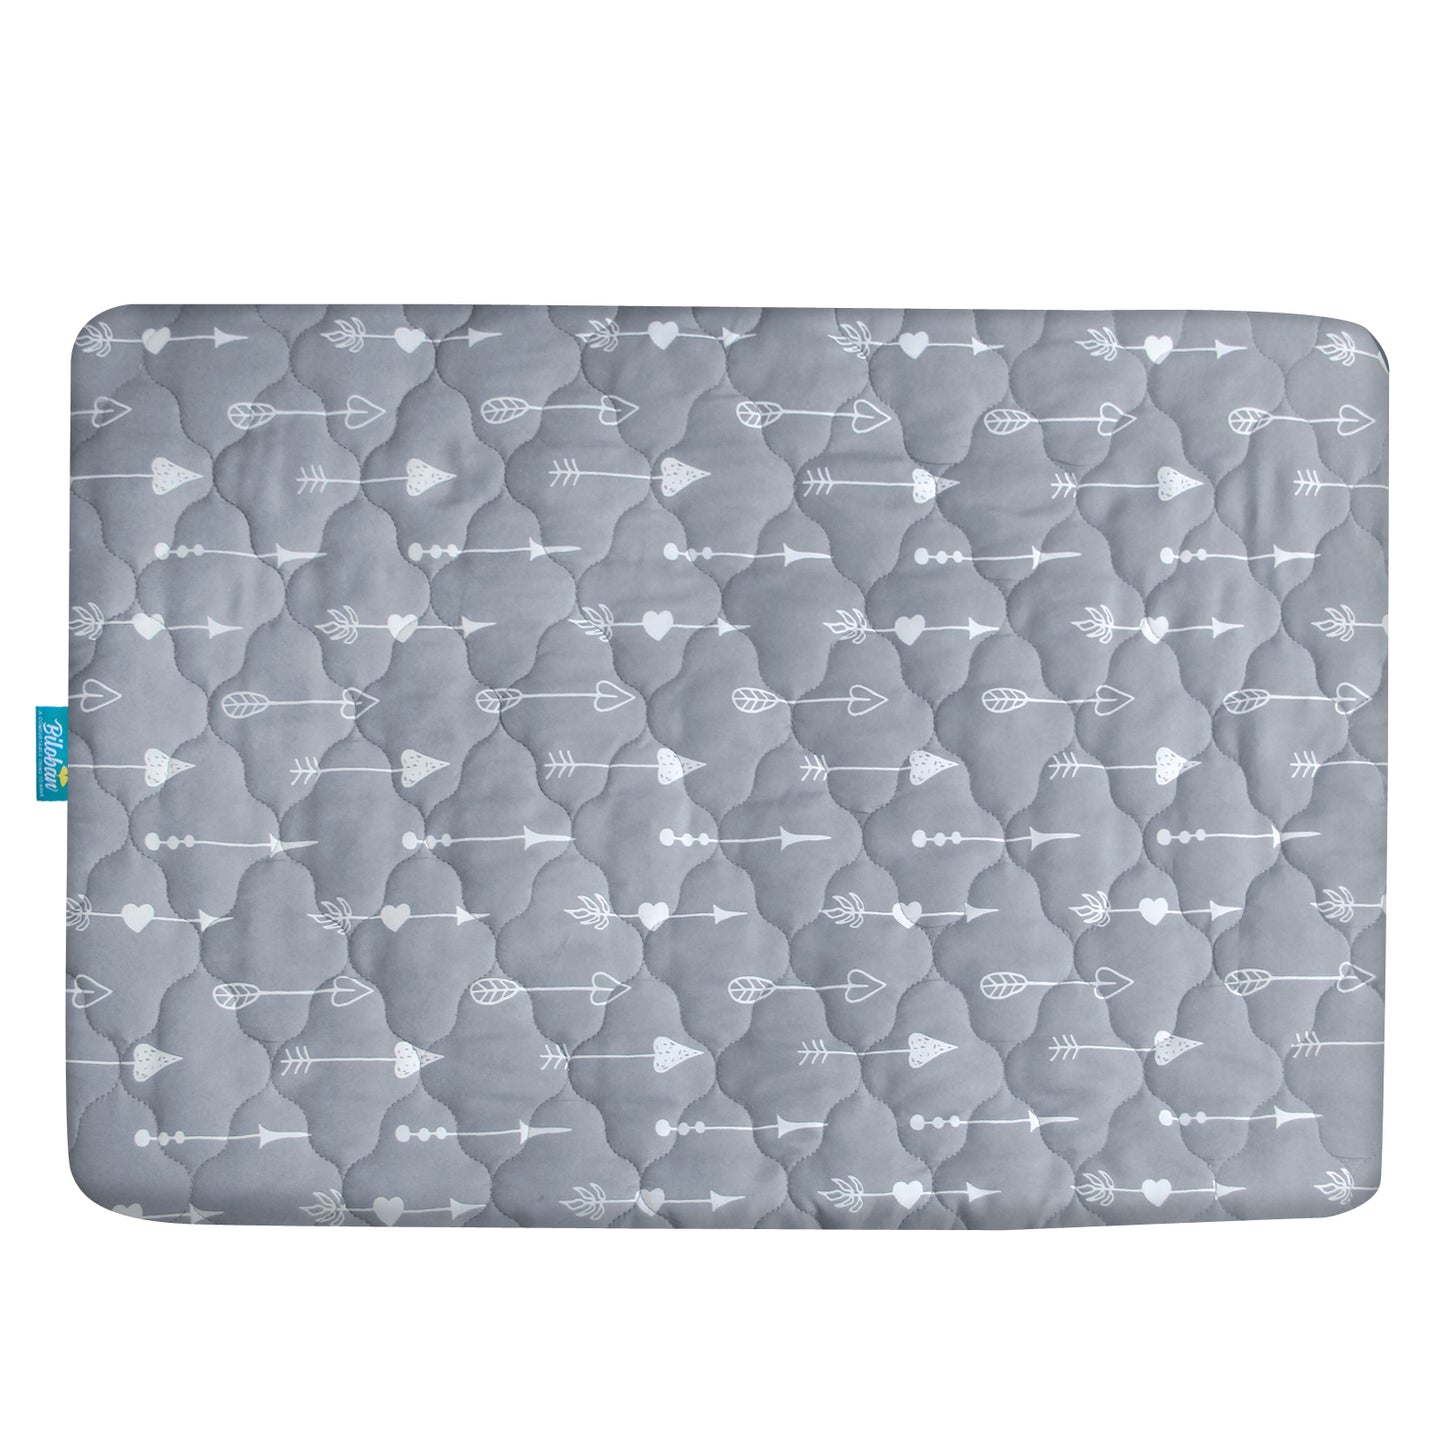 Pack N Play Mattress Pad Cover/ Protector - Ultra Soft Microfiber, Waterproof, Grey Arrow (for Standard Playpen/ Mini Crib) - Biloban Online Store